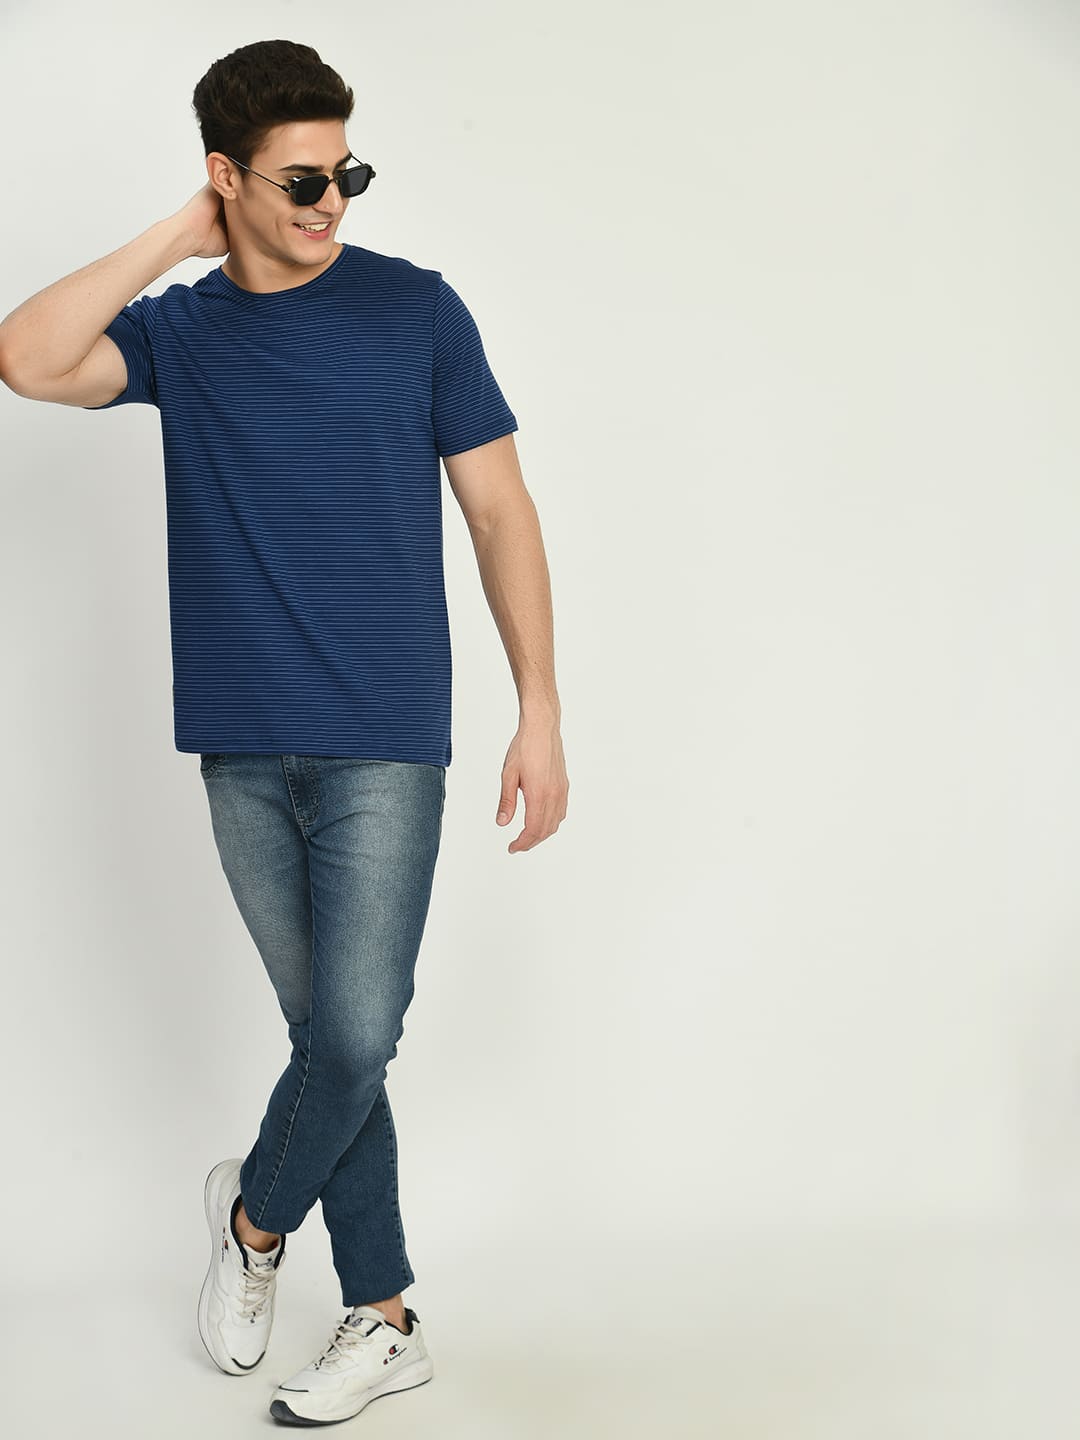 Men's Blue Striped Stylish Half Sleeve T-Shirt